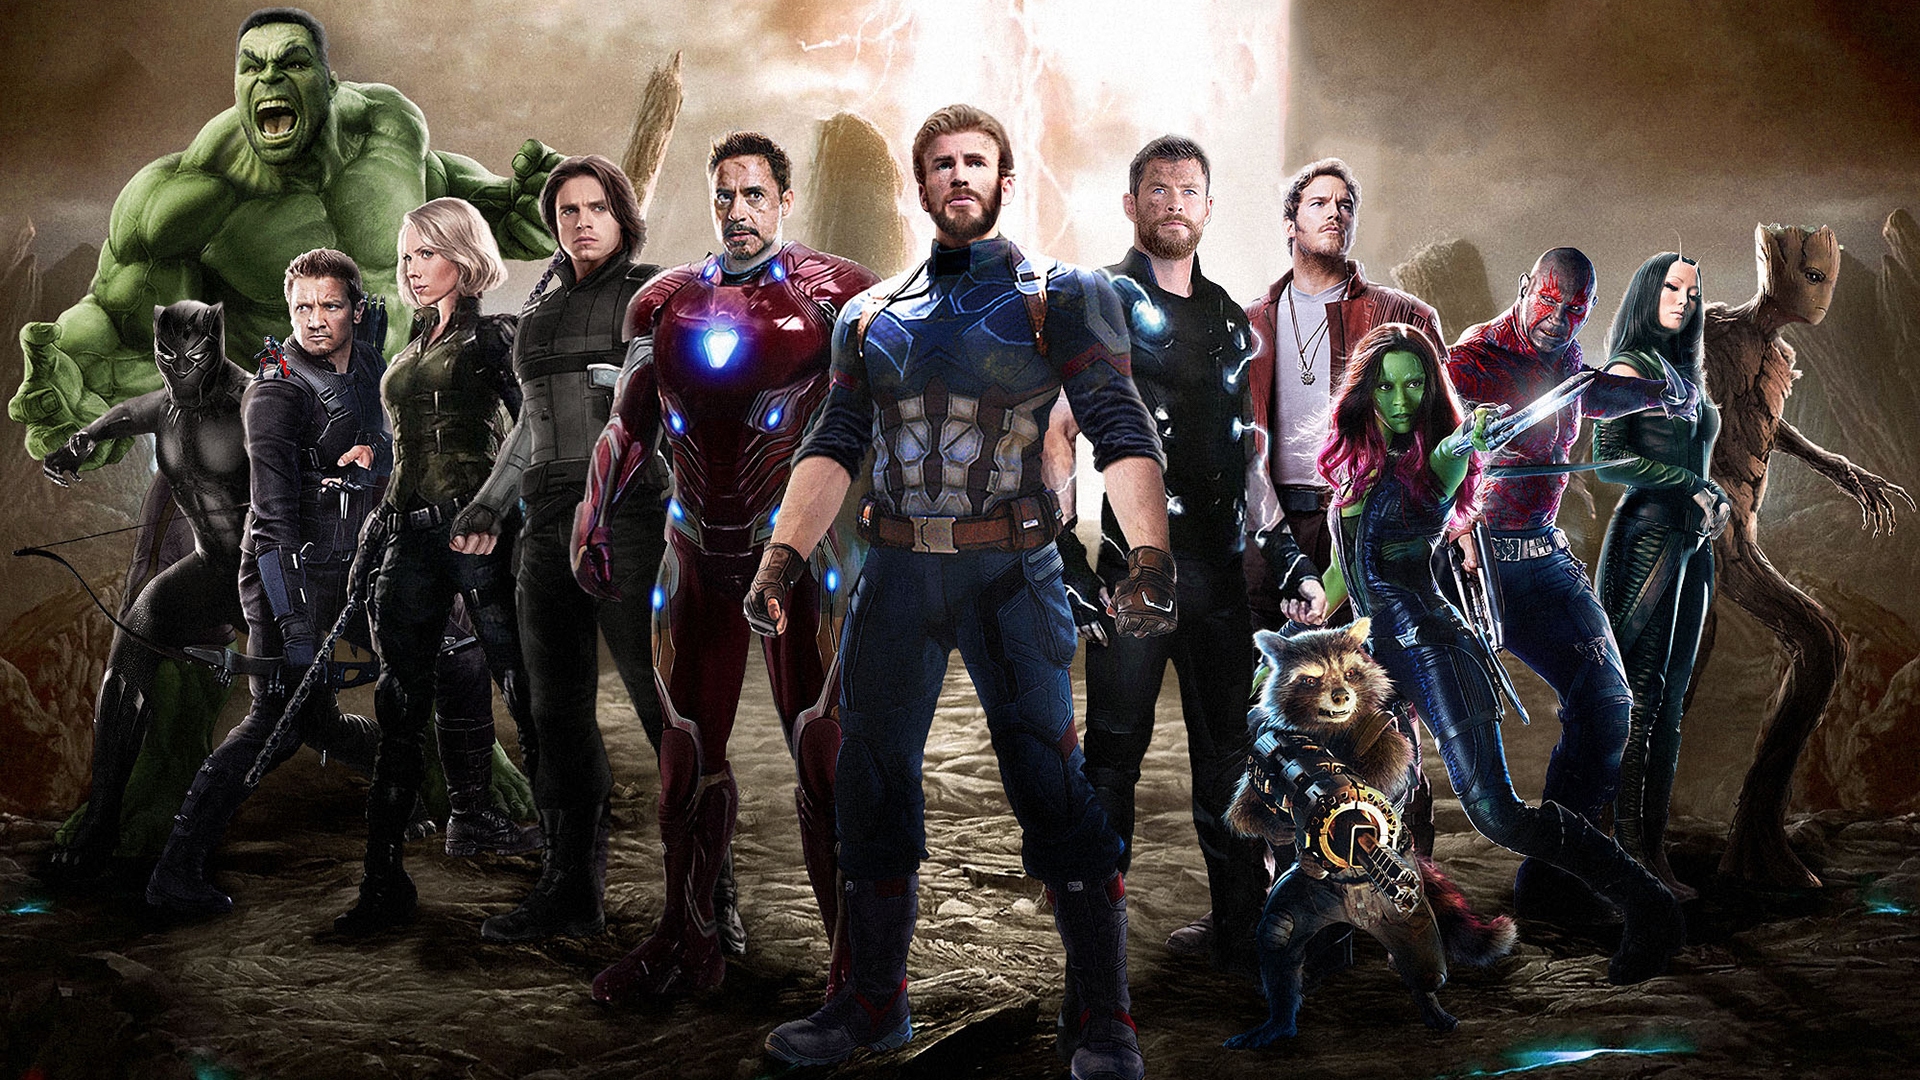 HD Avengers Infinity War Movie Cast